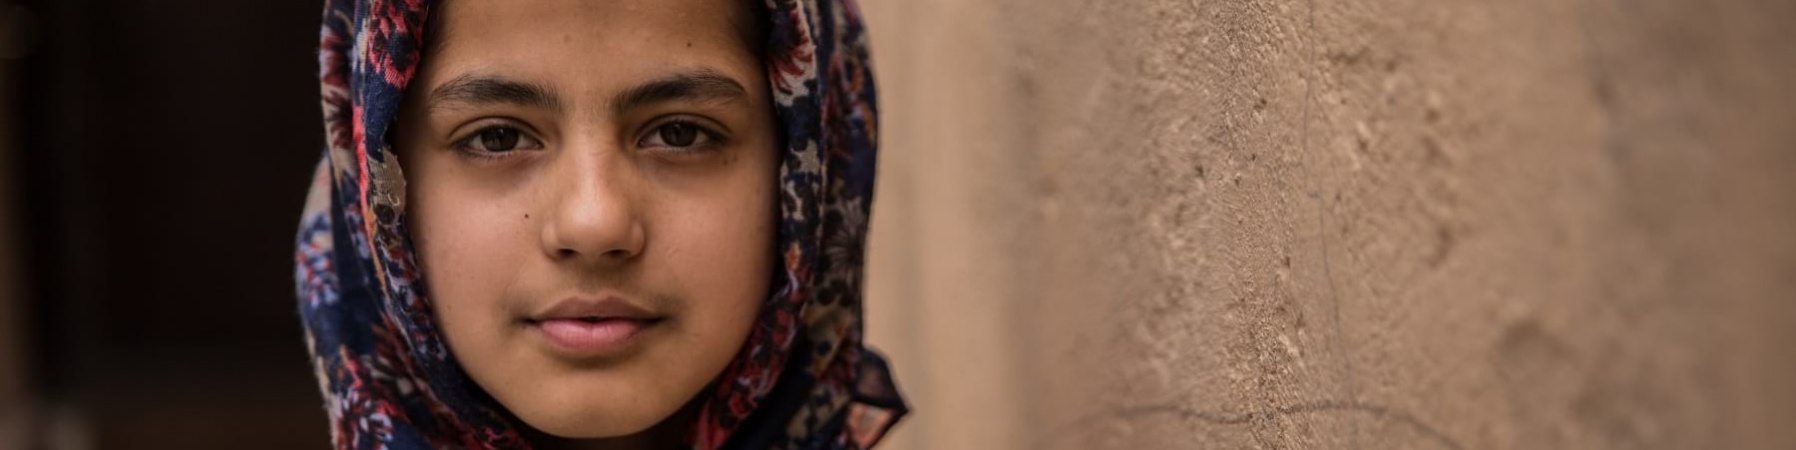 bambina afghana con hijab guarda in camera